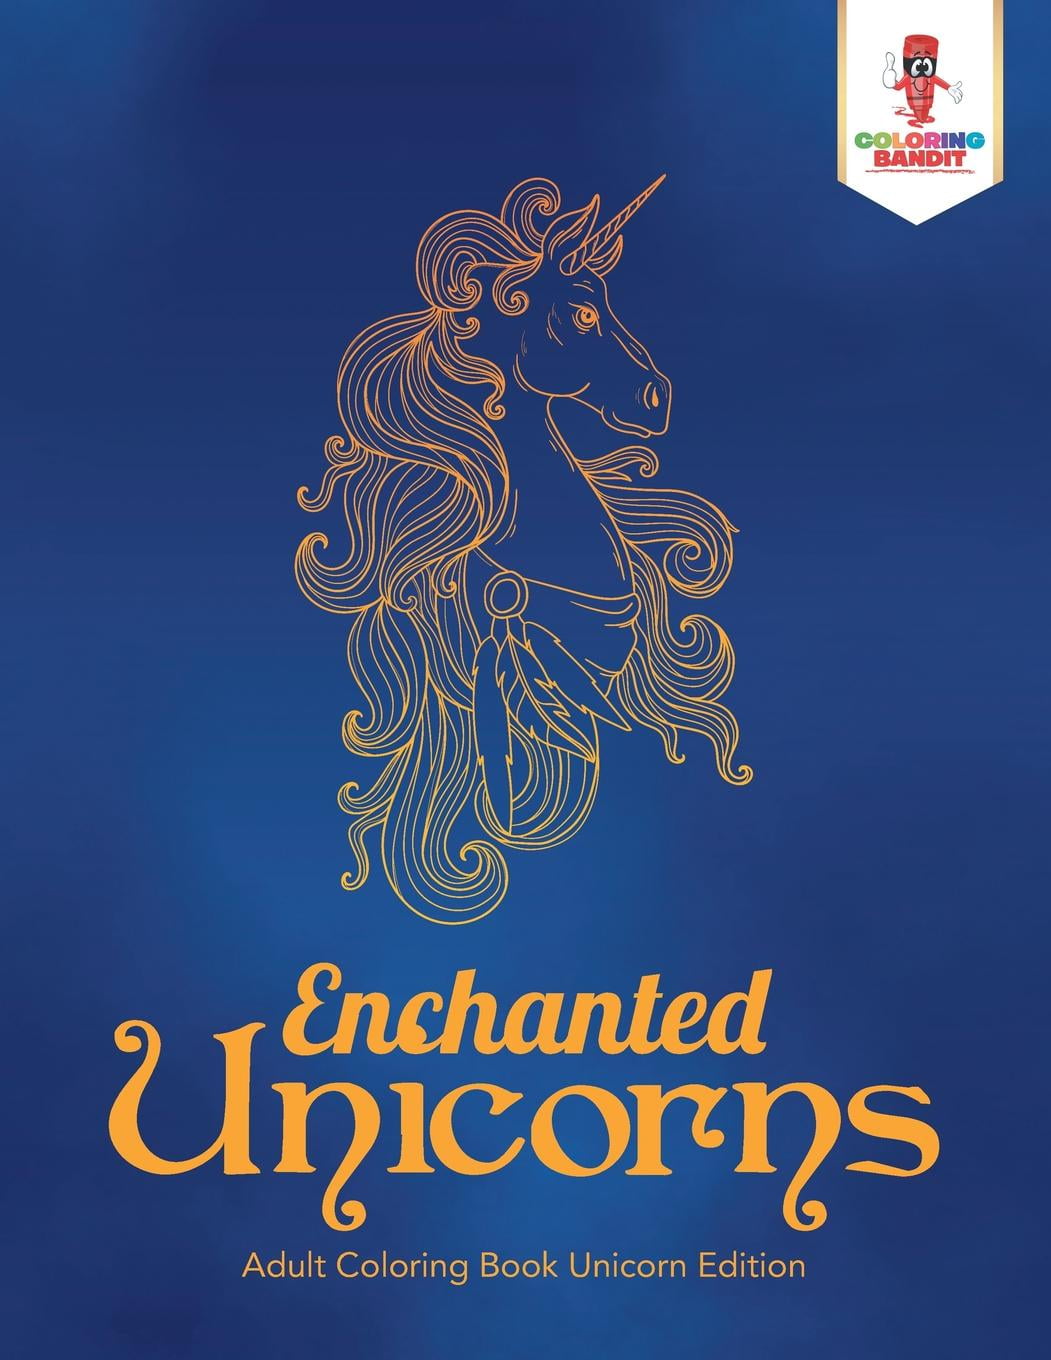 Coloring Bandit Enchanted Unicorns Adult Coloring Book Unicorn Edition Paperback Walmart Com Walmart Com